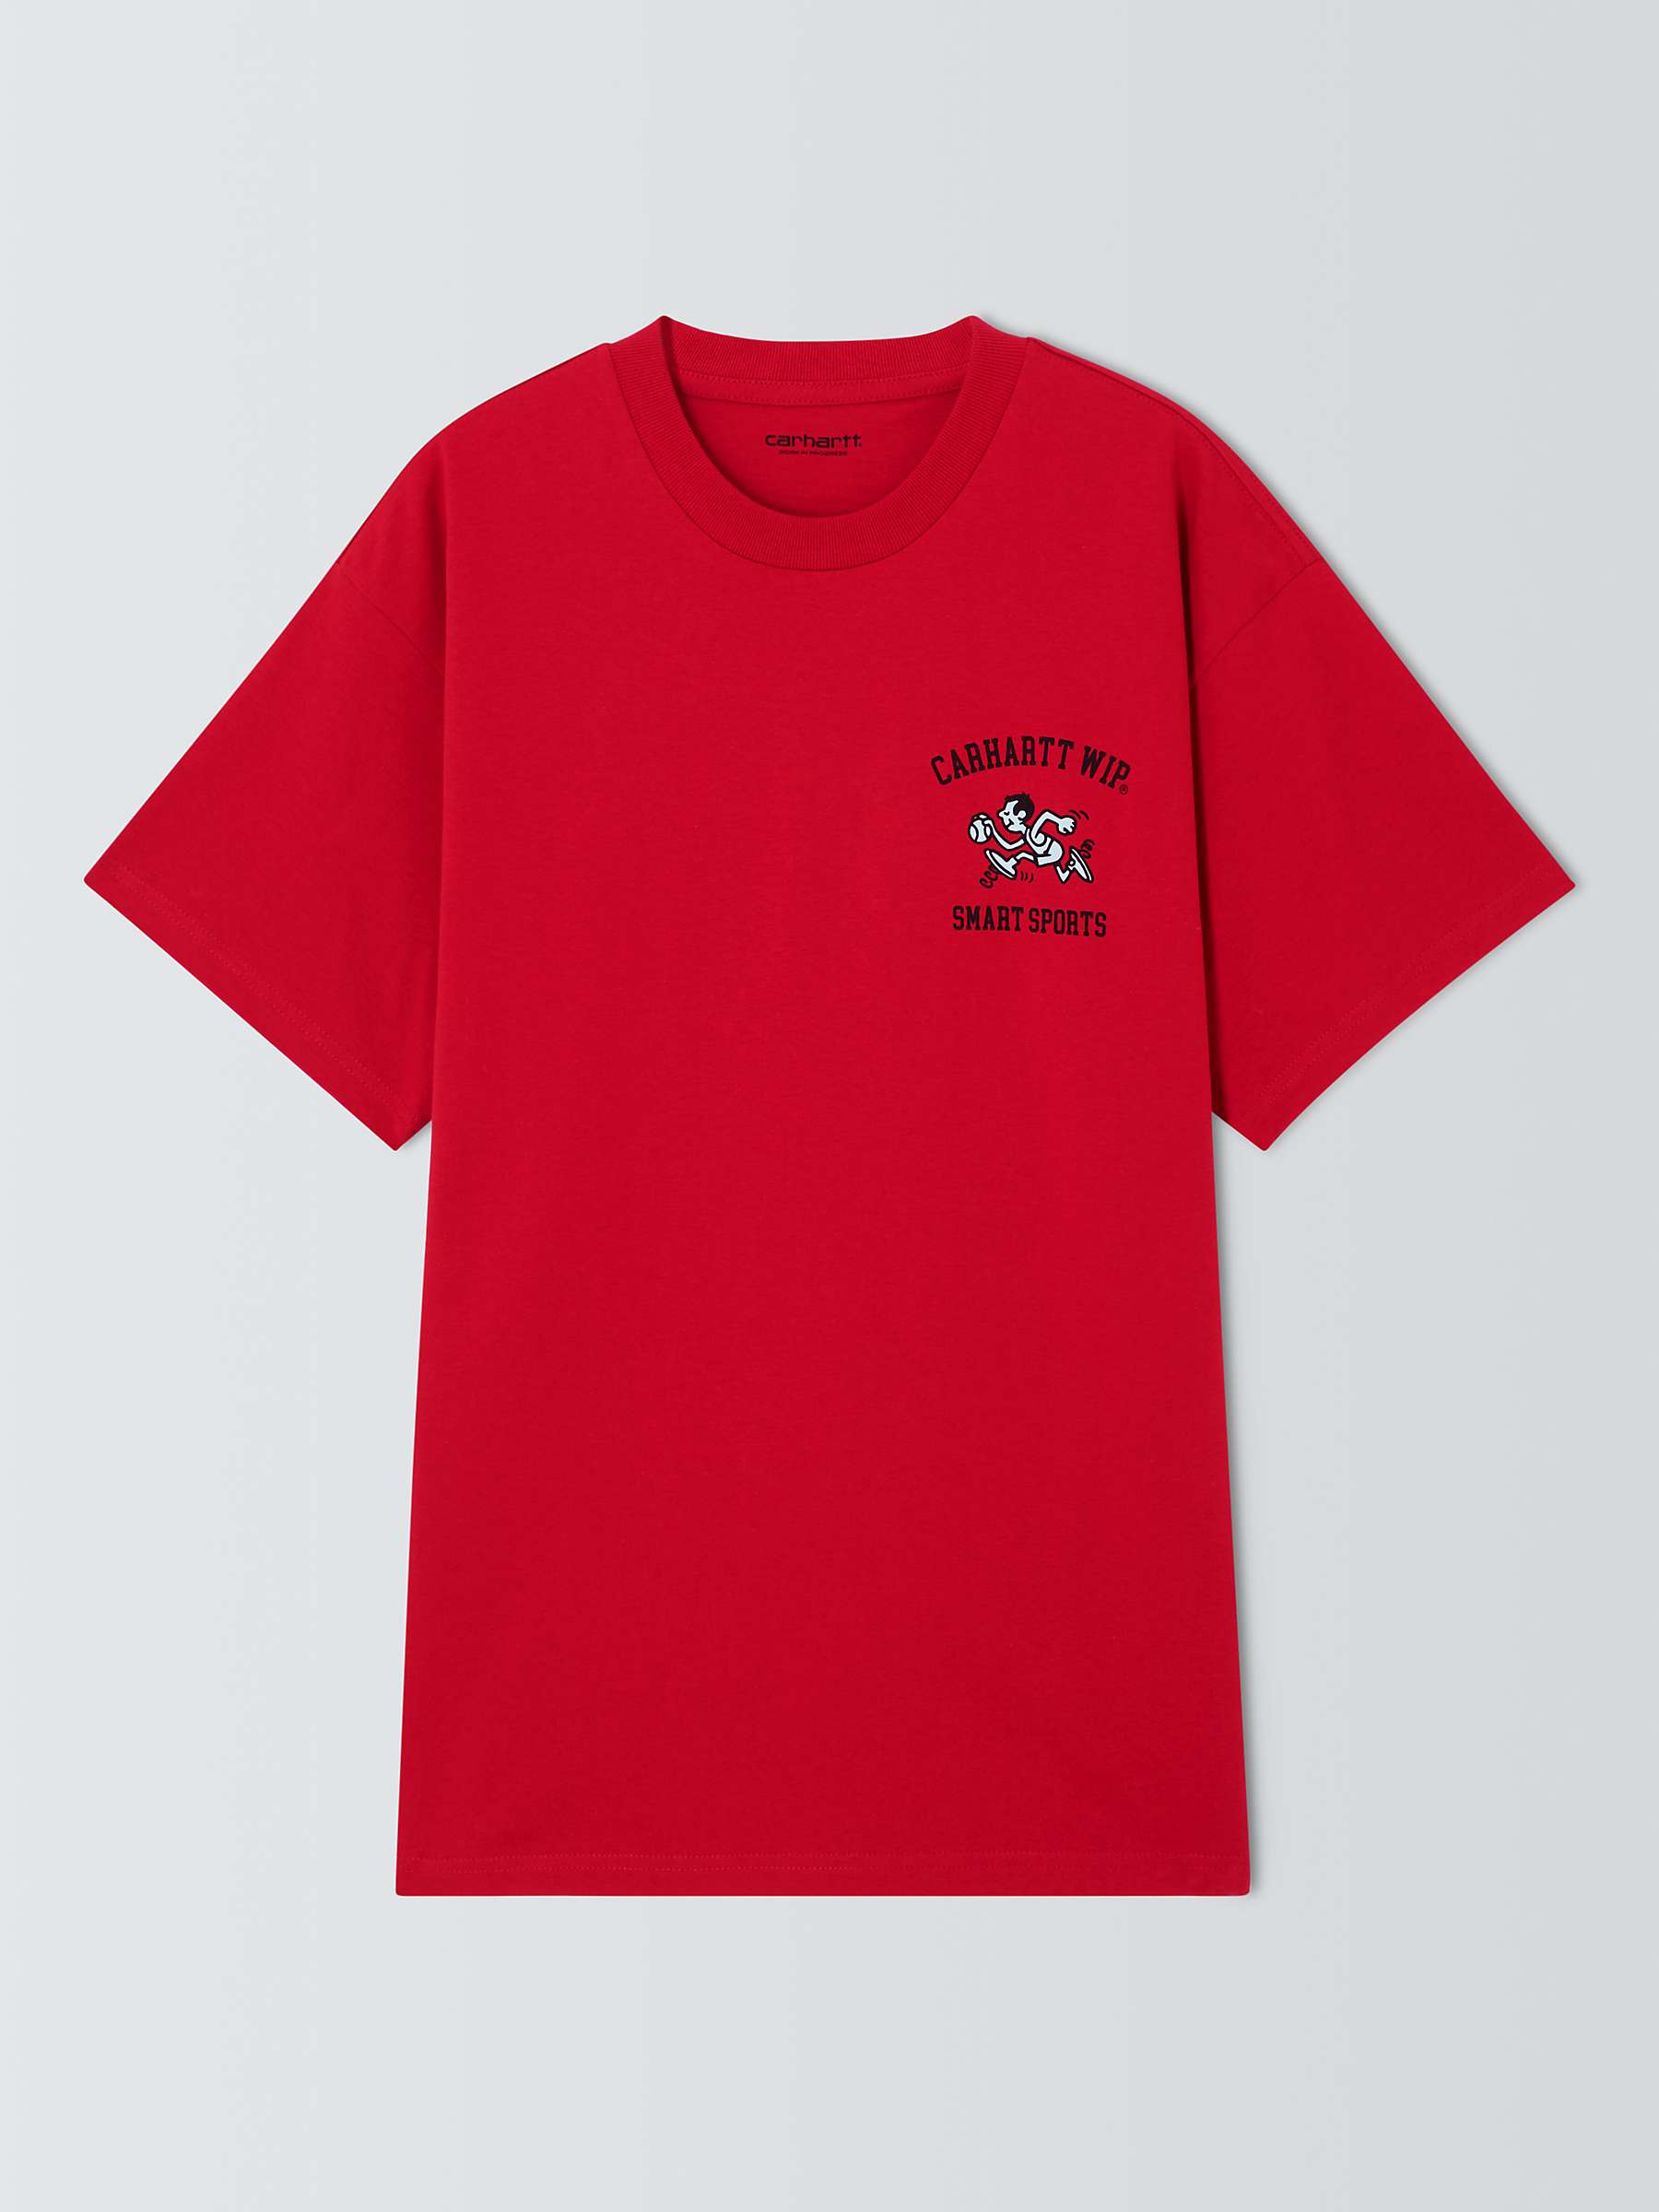 Buy Carhartt WIP Short Sleeve Smart Sports T-Shirt, Red Online at johnlewis.com